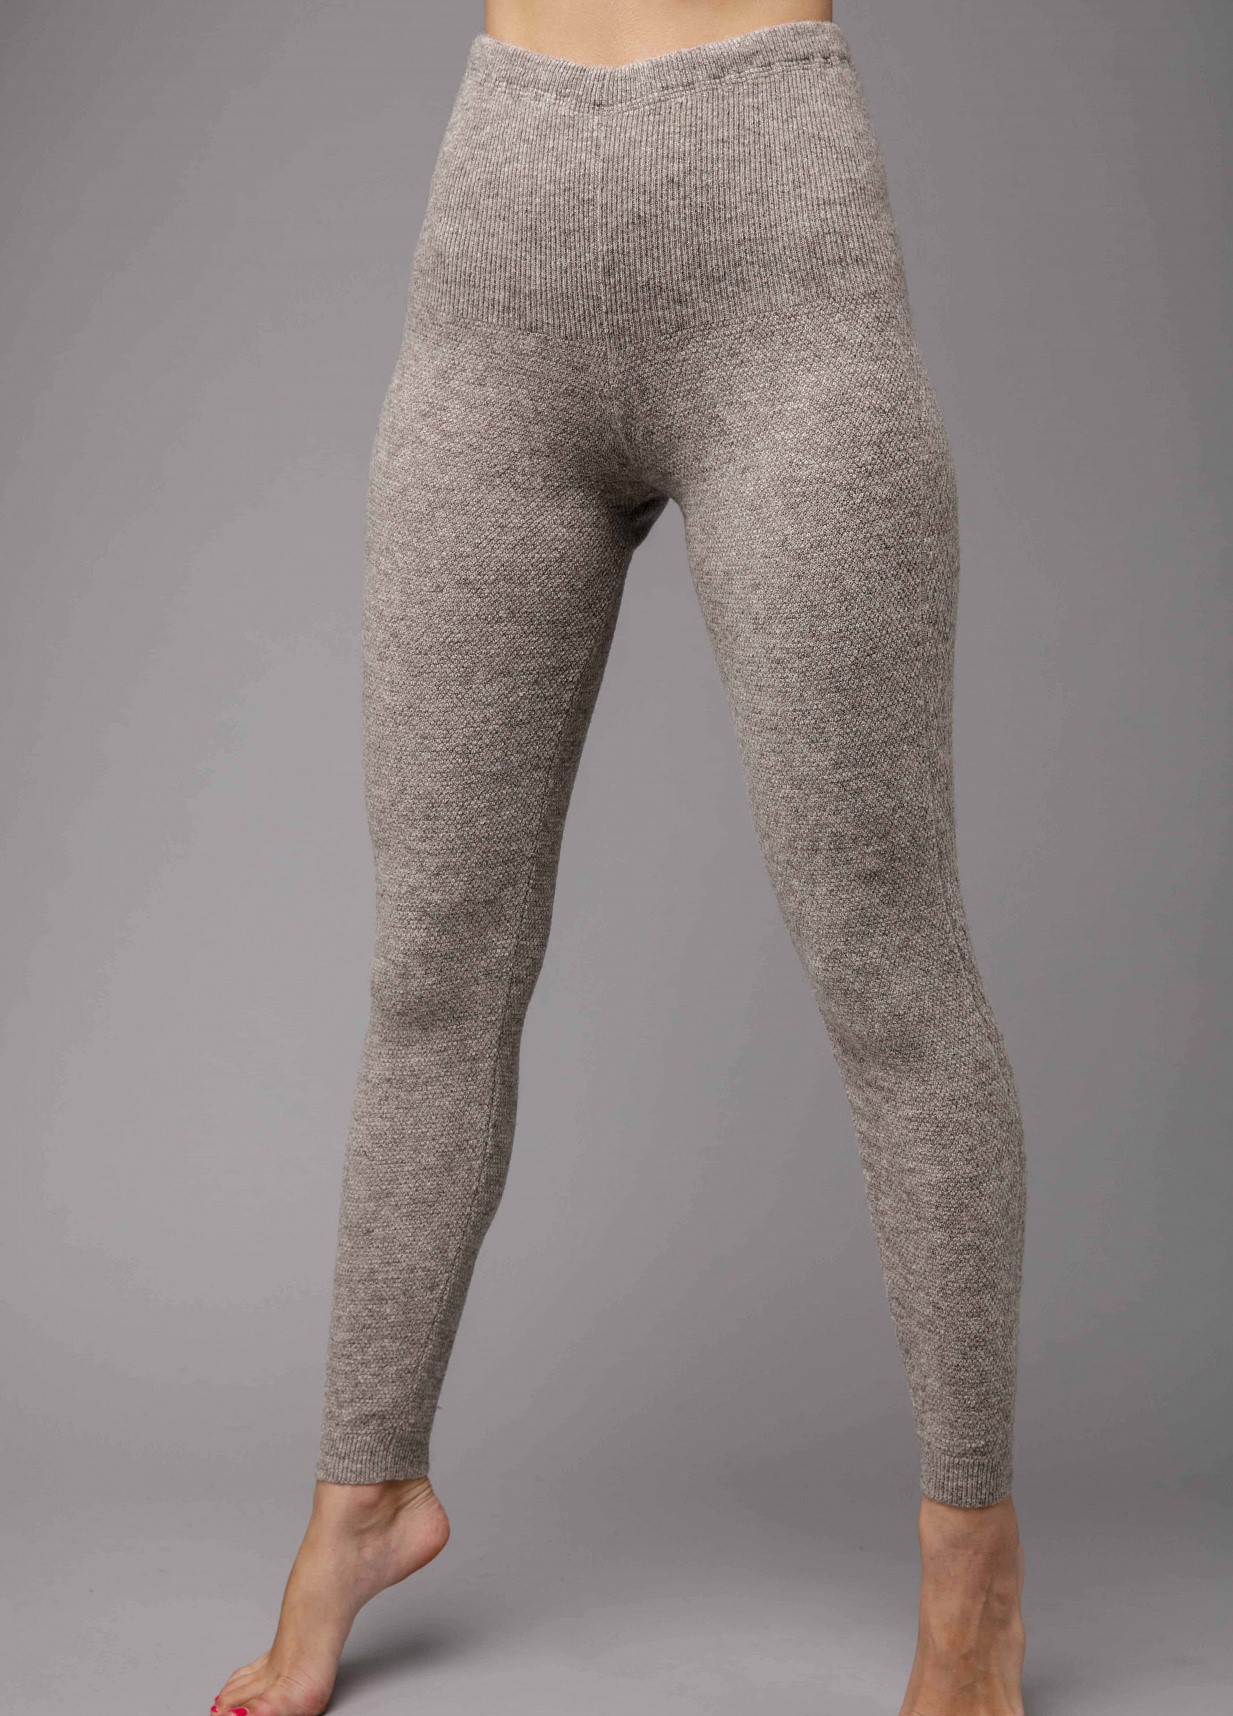 Fur Lined Leggings For Women  International Society of Precision